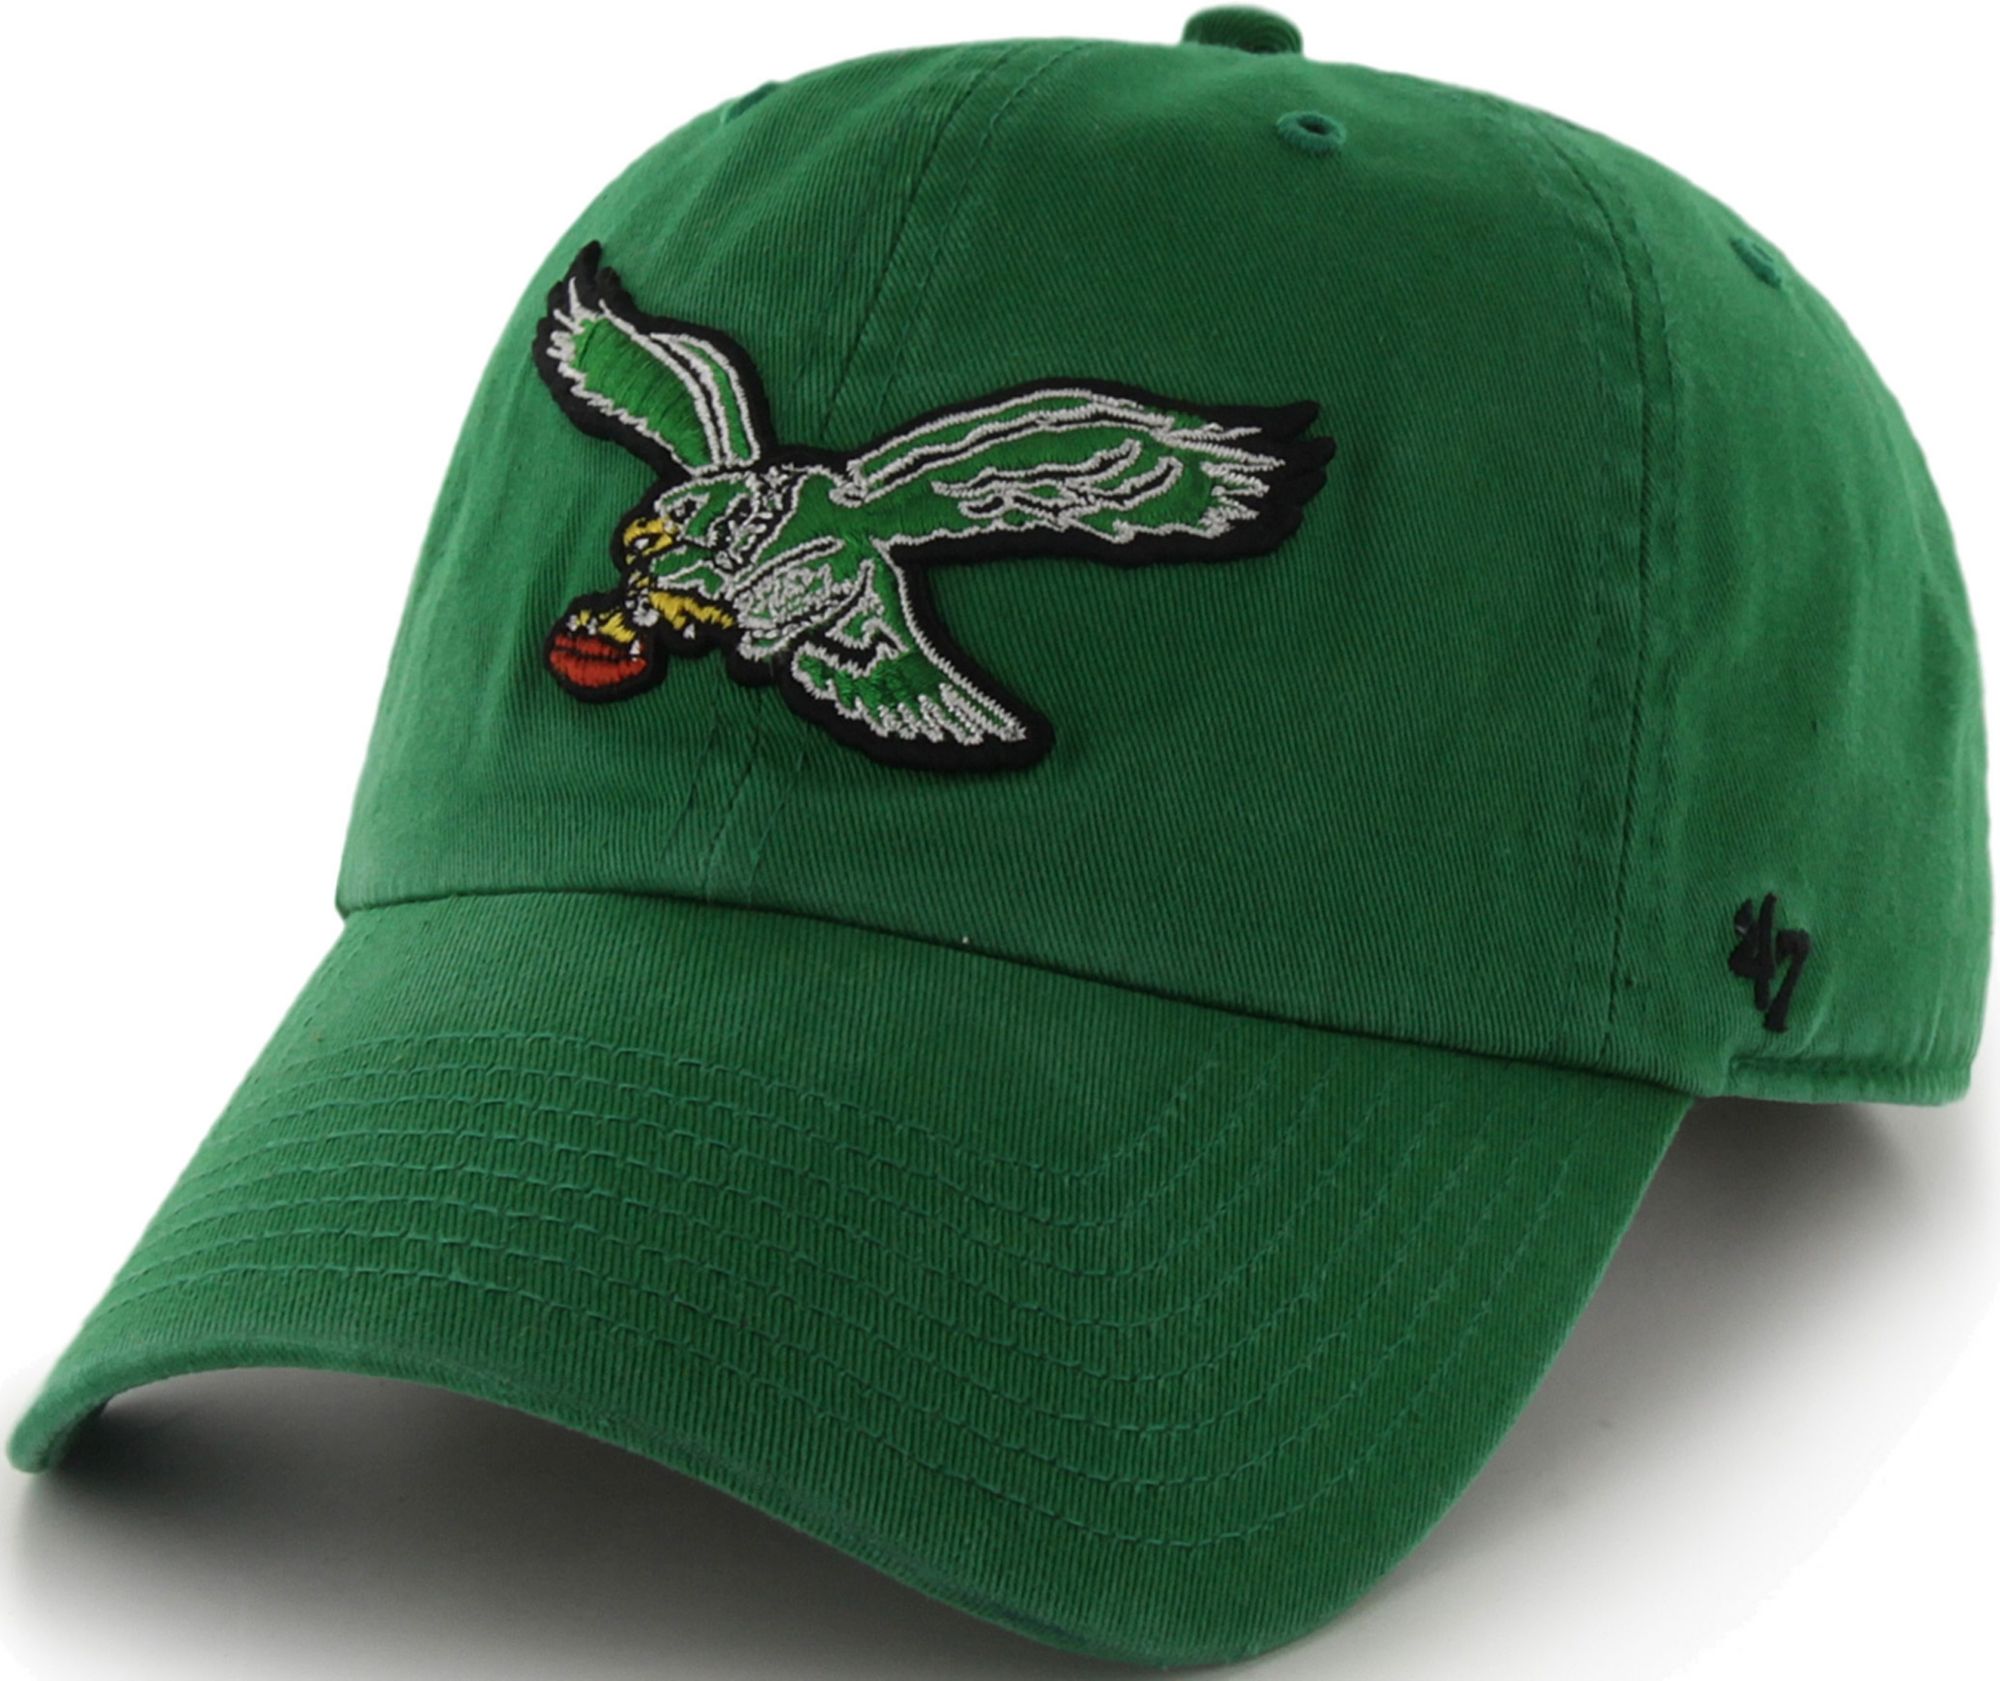 Philadelphia Eagles green cap